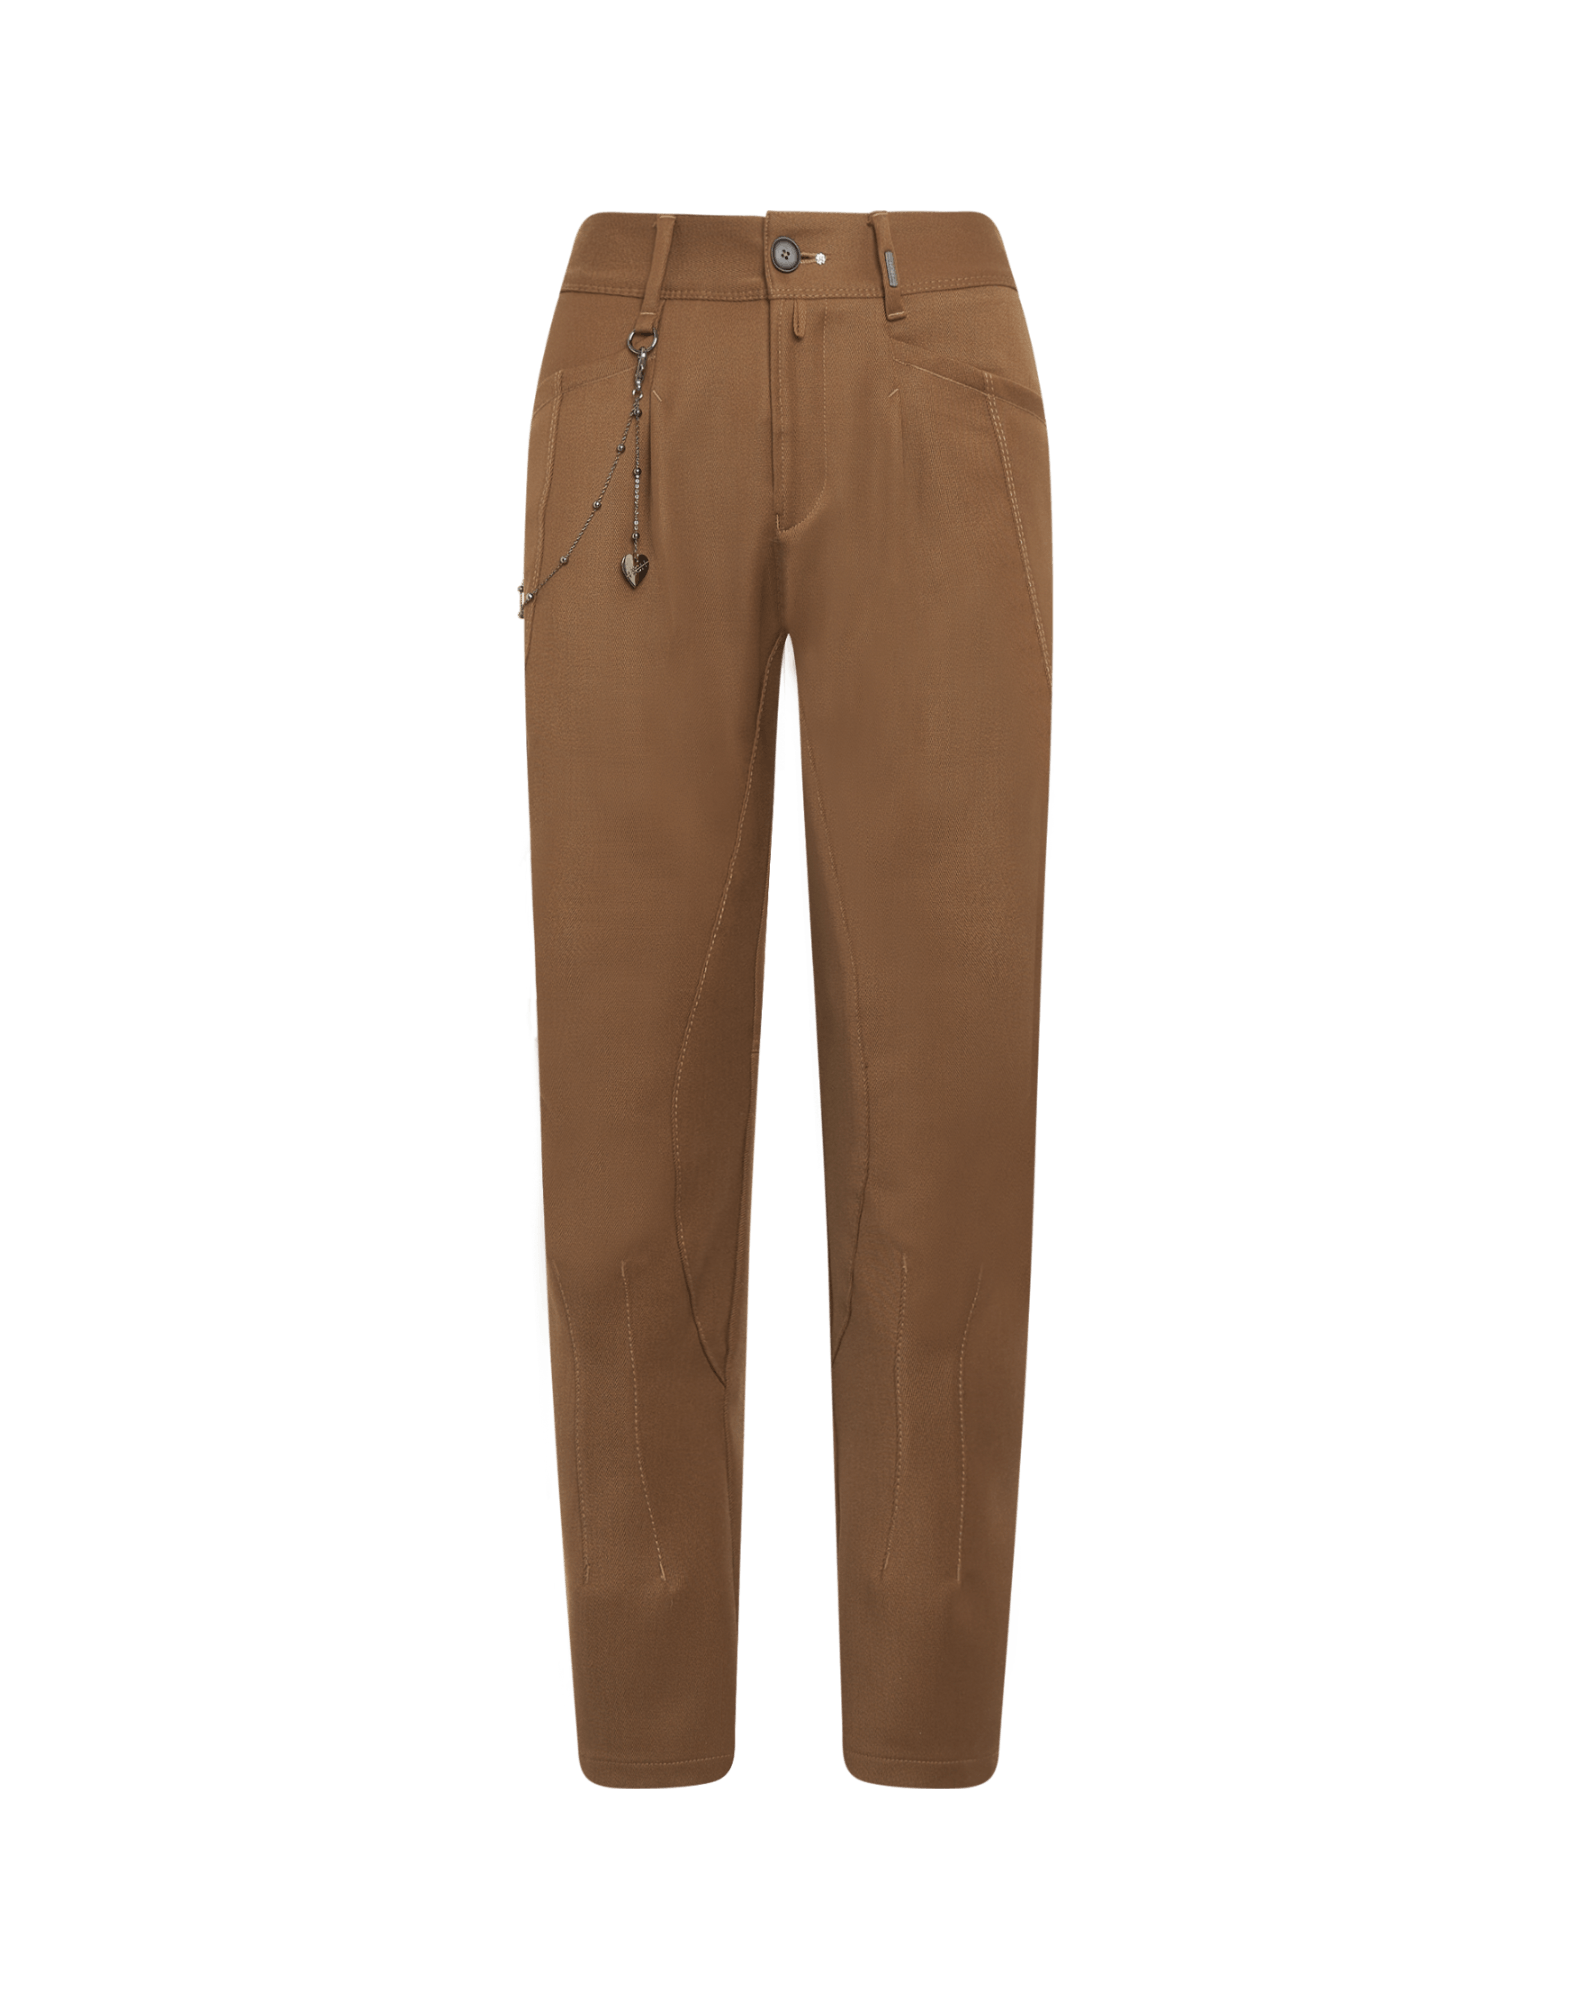 Sequel Jodhpur style tailored pants – The LBD Shop